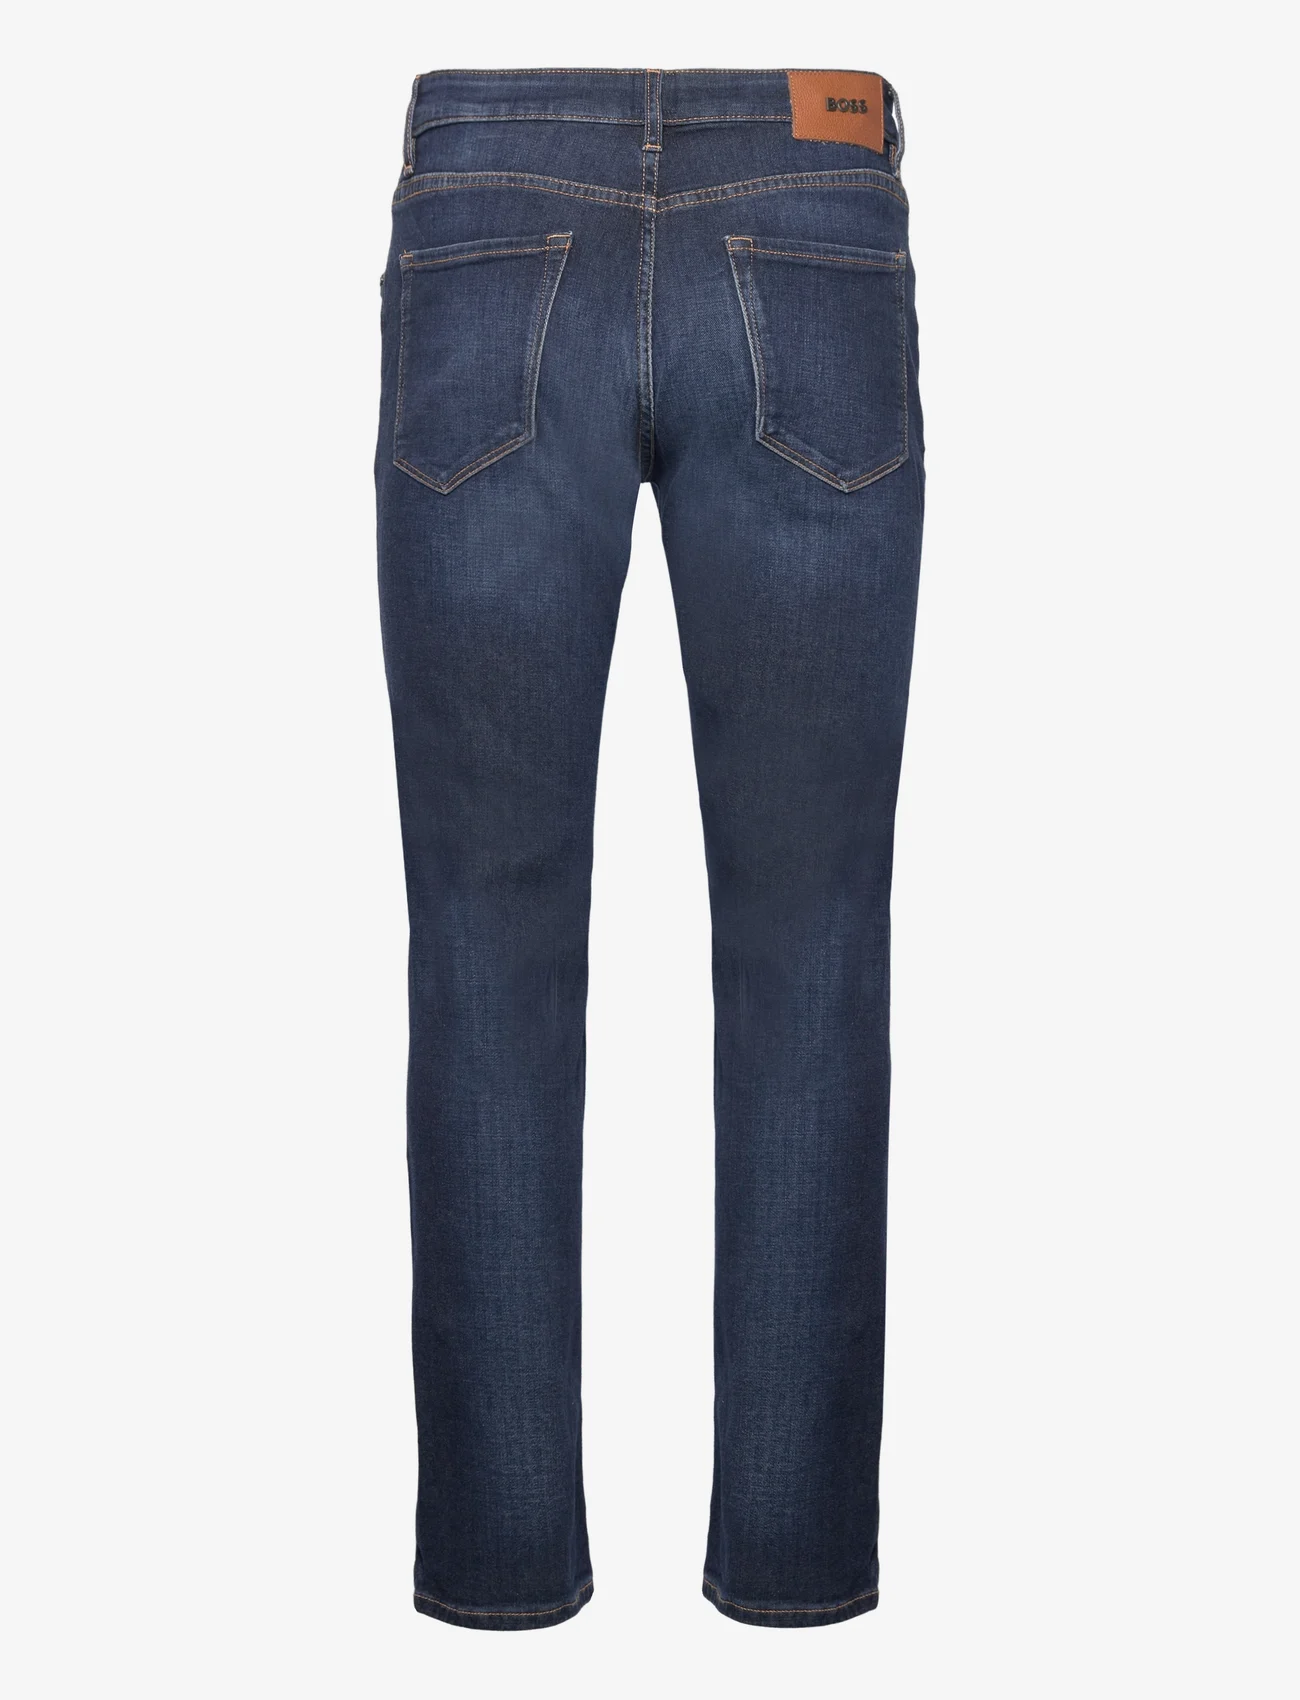 BOSS - Maine3 - regular jeans - navy - 1